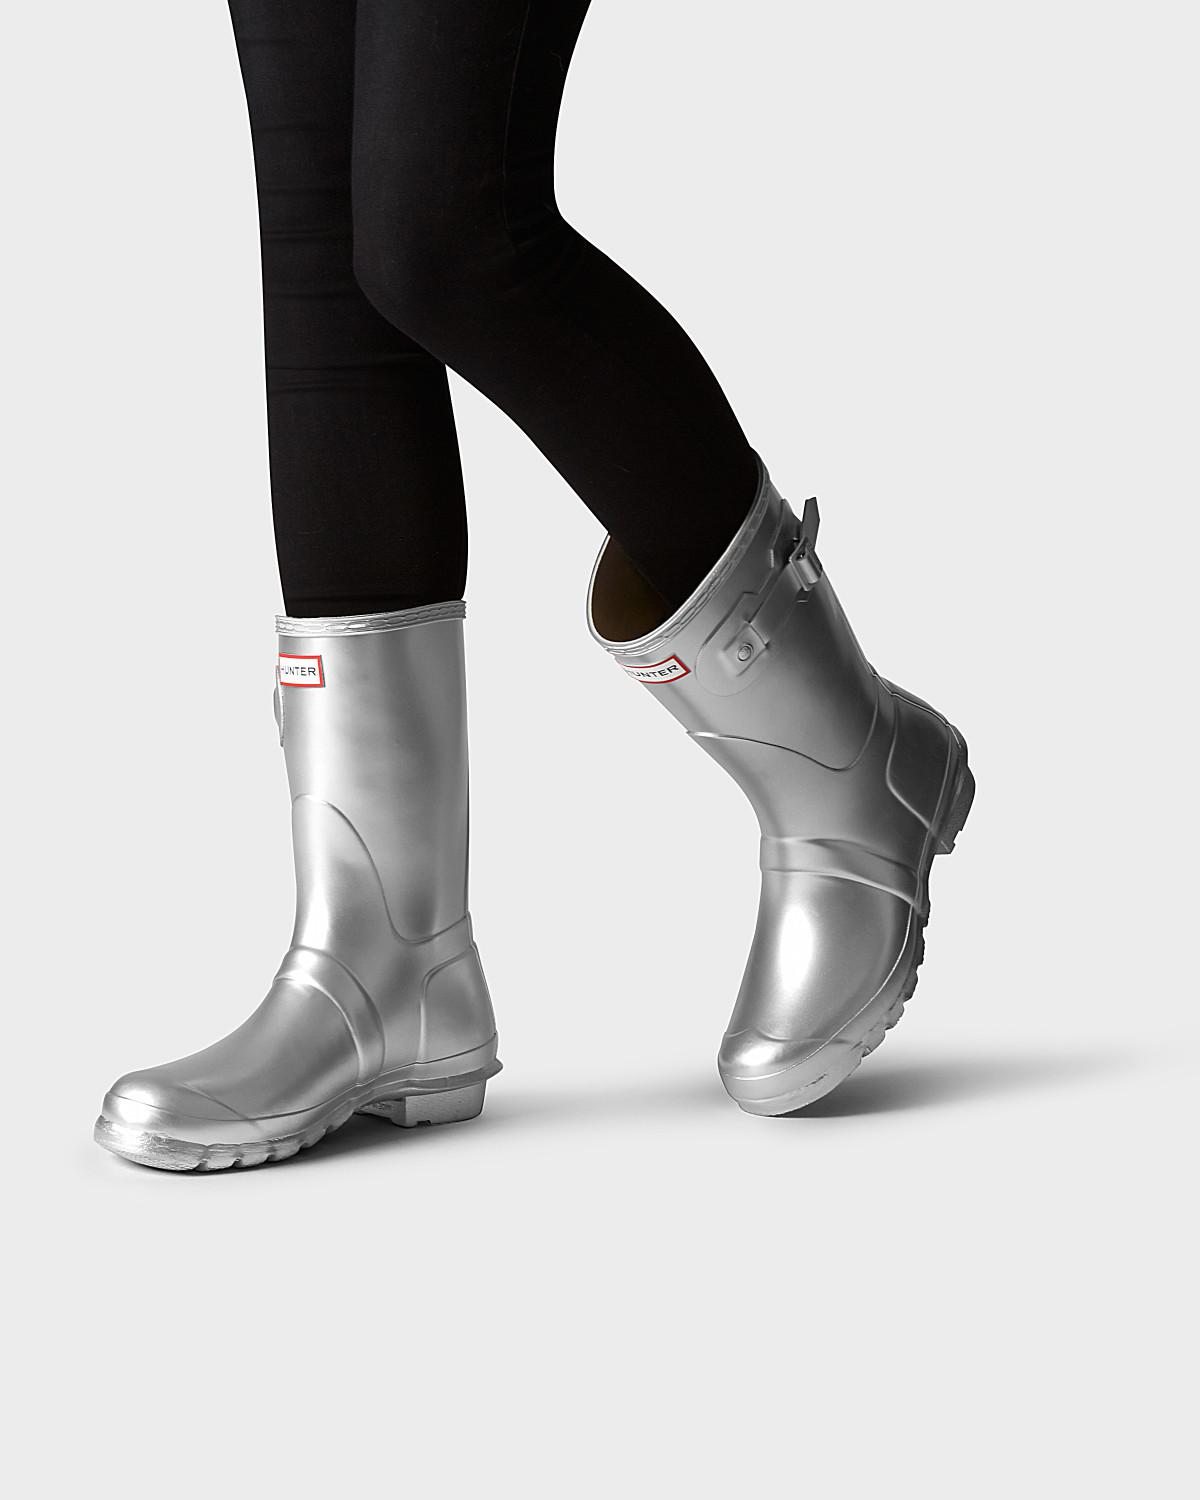 HUNTER Rubber Women's Original Short Wellington Boots in Silver (Metallic)  - Lyst